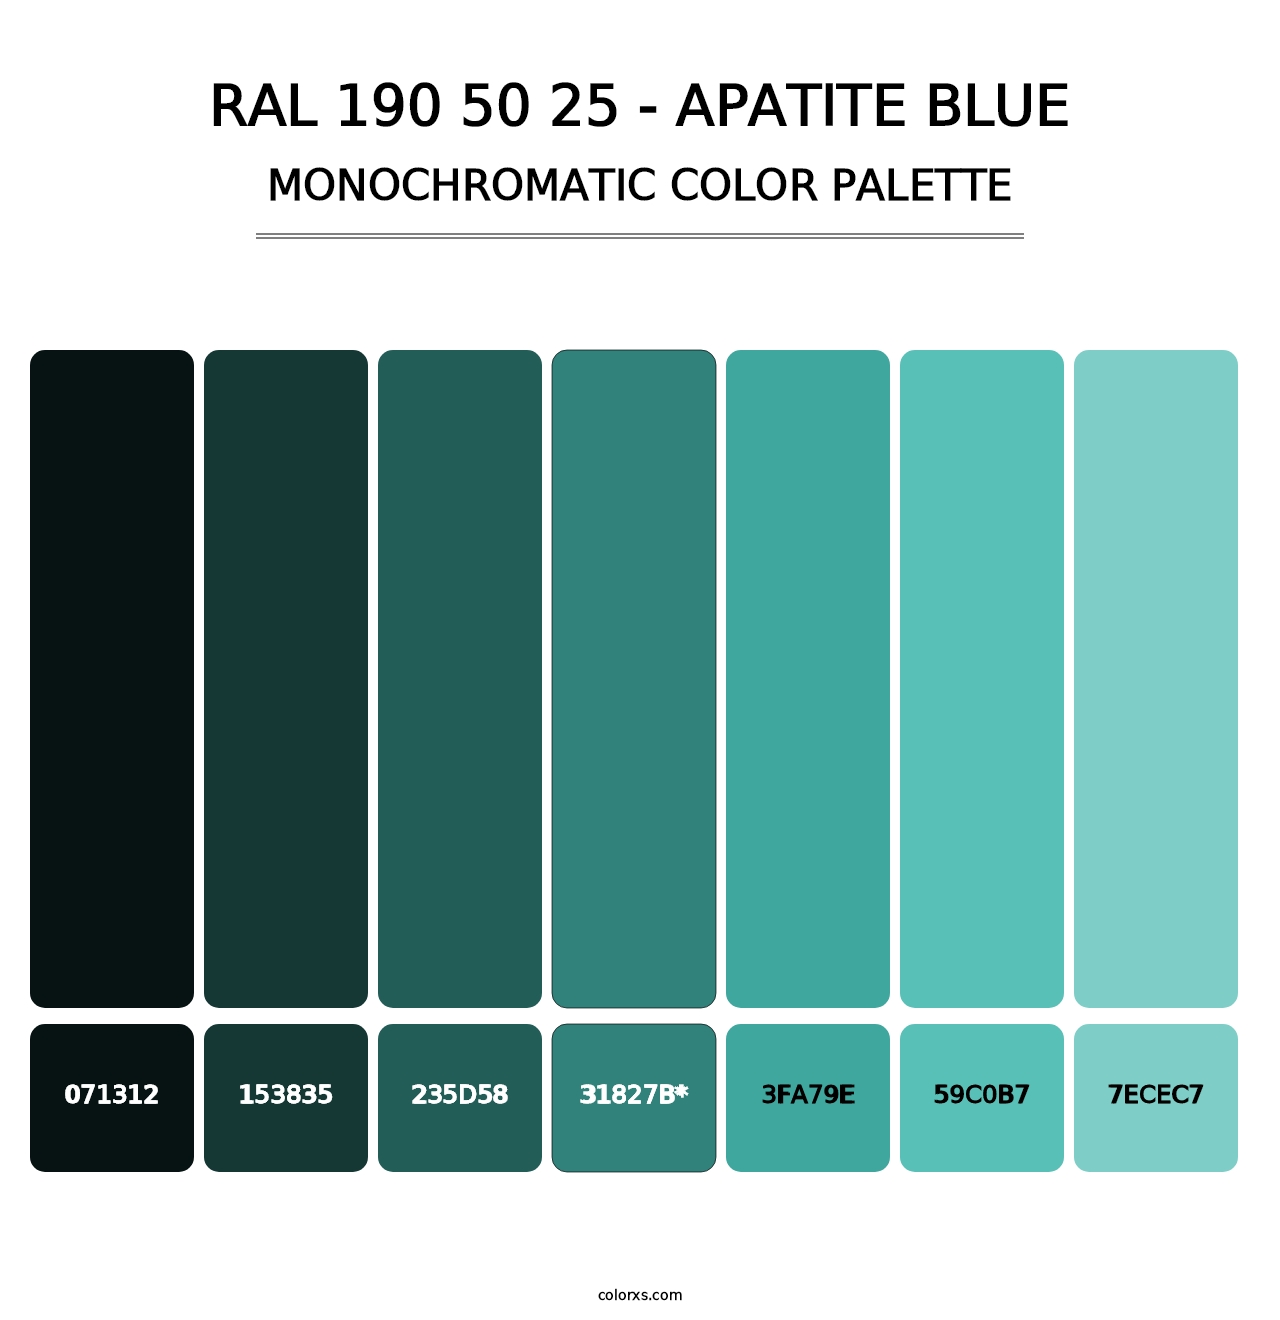 RAL 190 50 25 - Apatite Blue - Monochromatic Color Palette